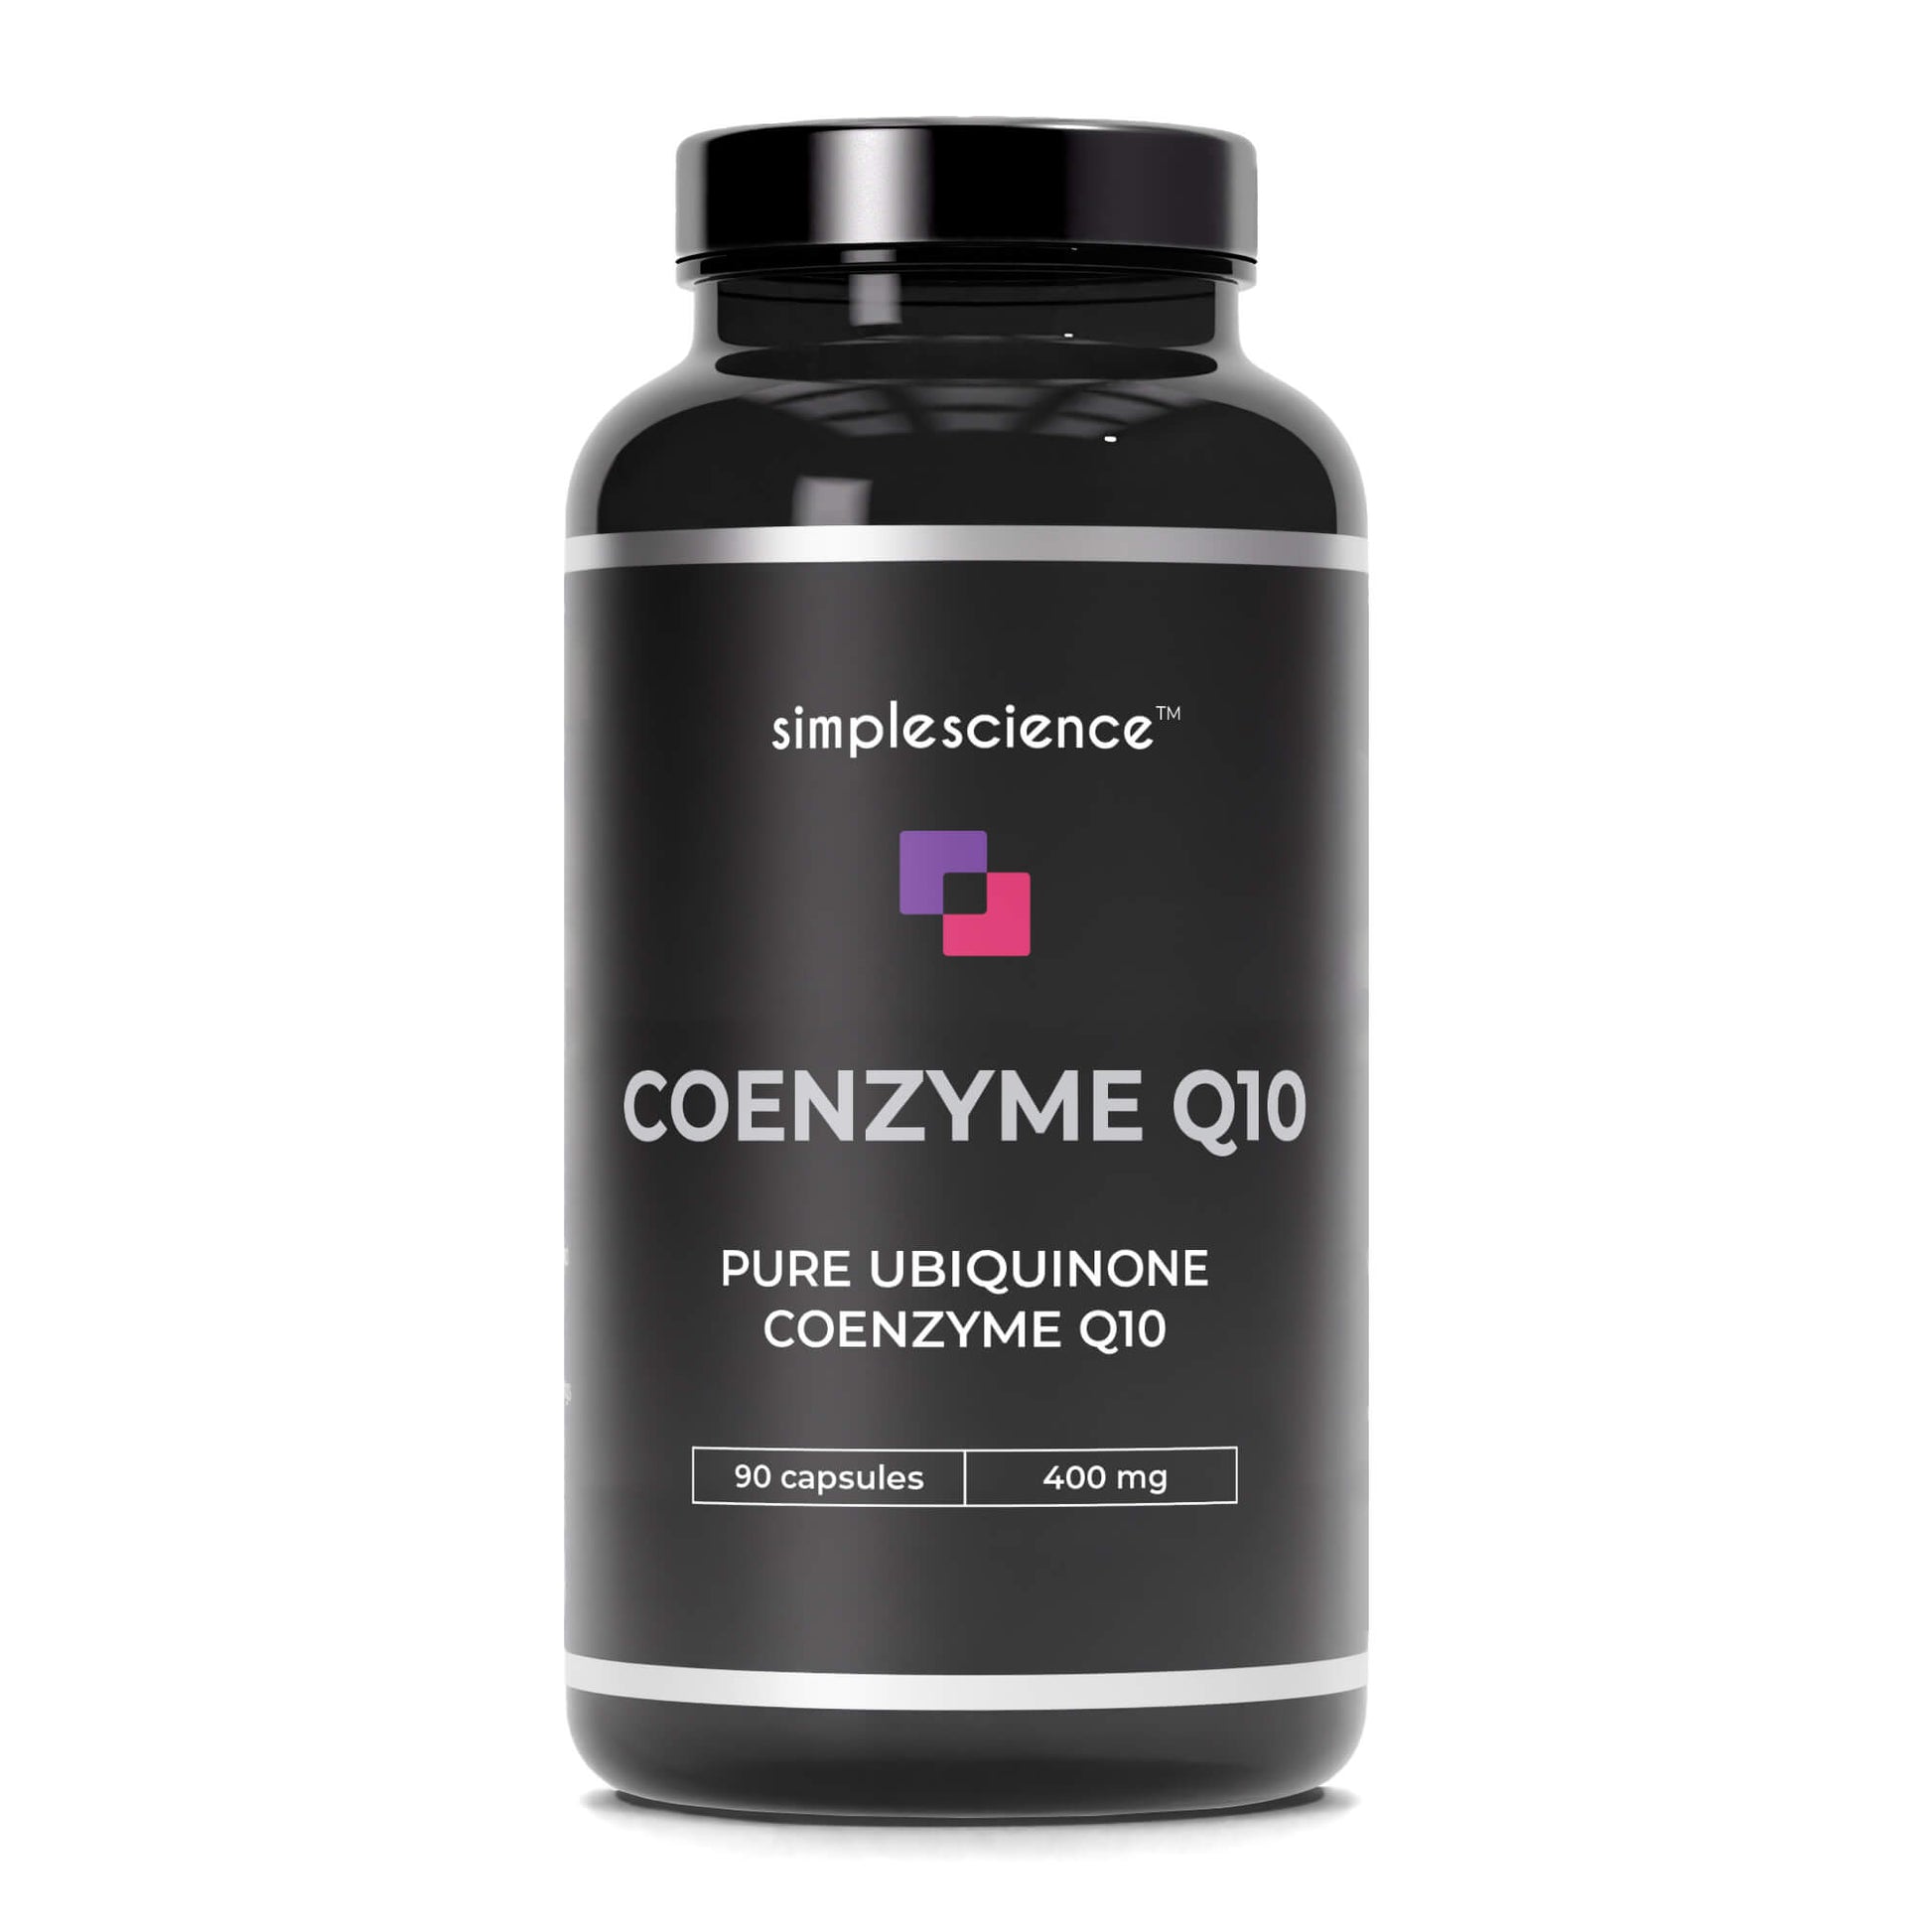 CoEnzyme Q10 CoQ10 pure ubiquinone coenzyme Q10 400mg 90 capsules migraine prevention anti-aging nootropic simplescience best supplement cognitive focus